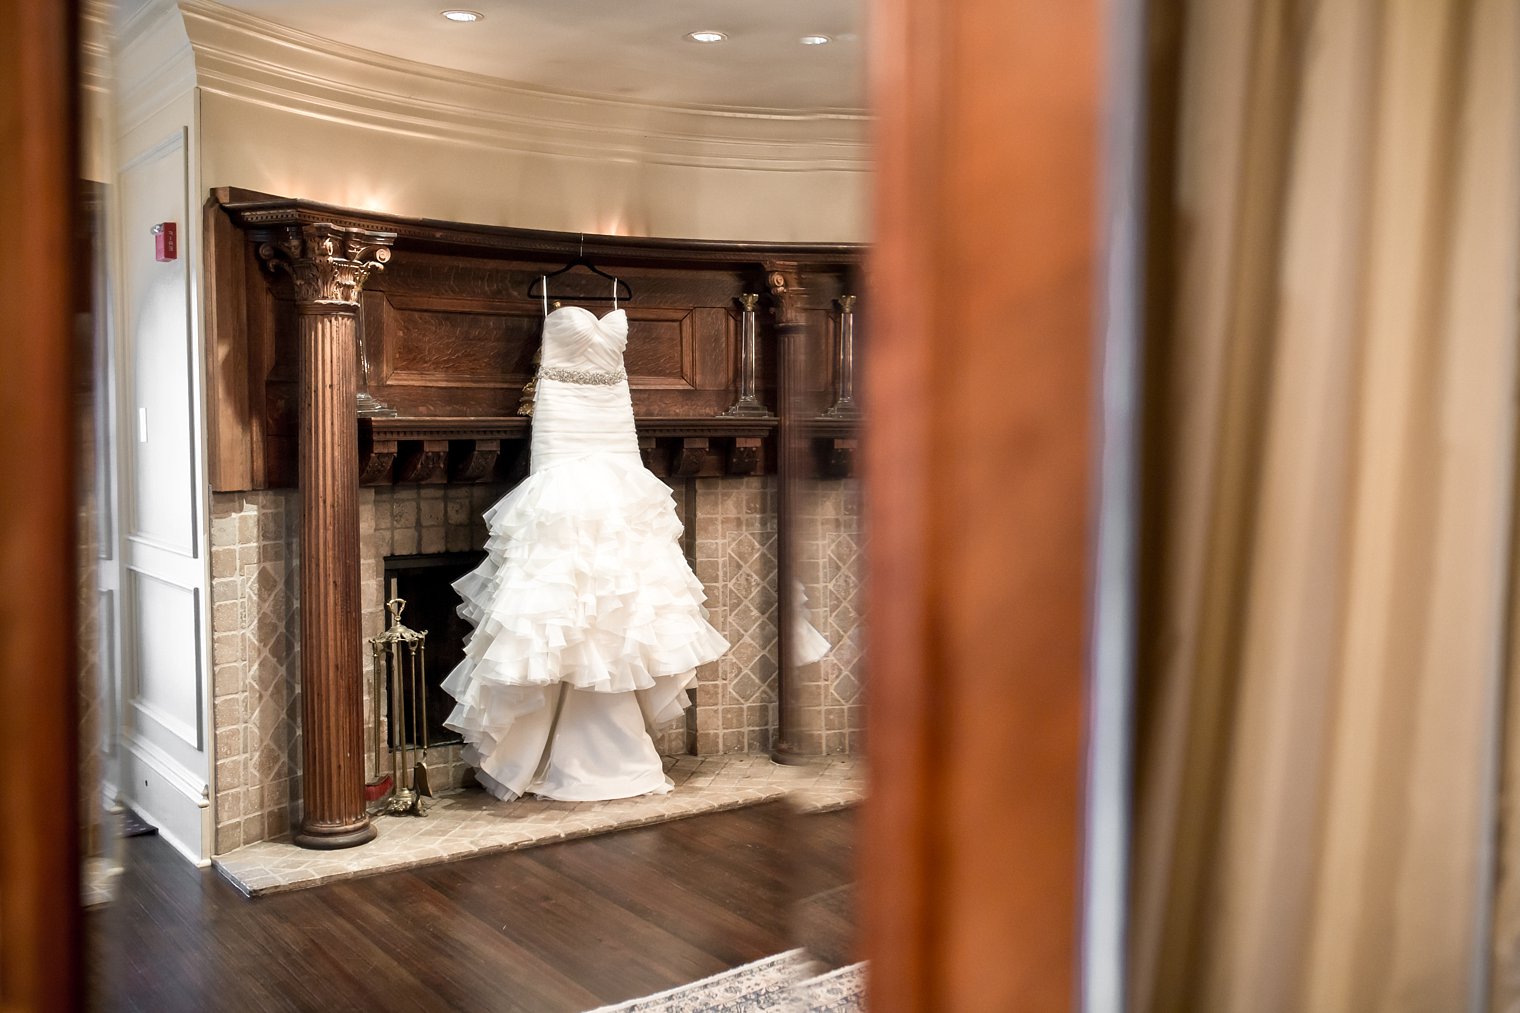 Park Savoy wedding dress photo in bridal suite